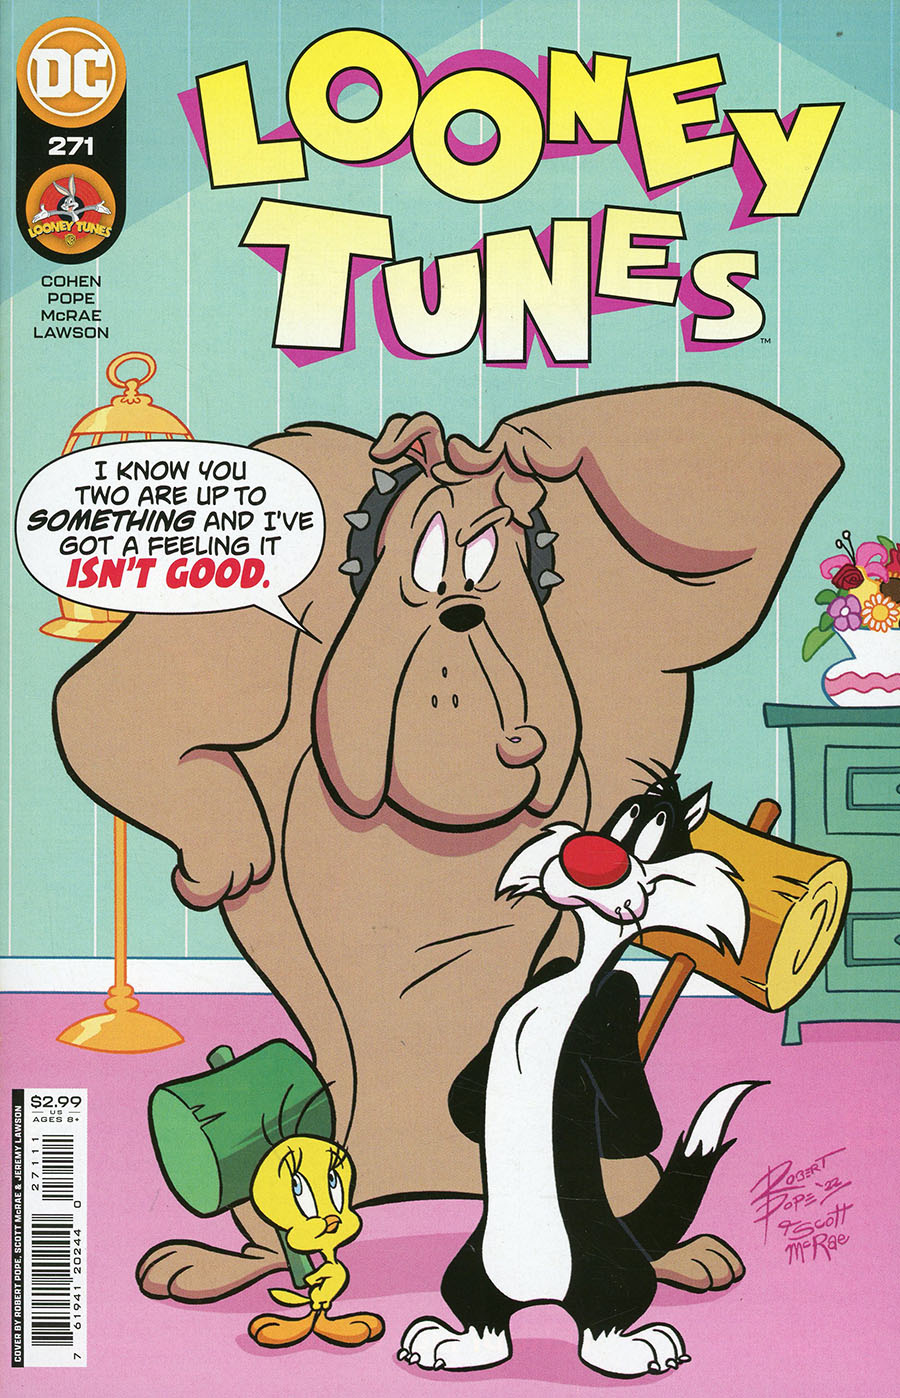 Looney Tunes Vol 3 #271